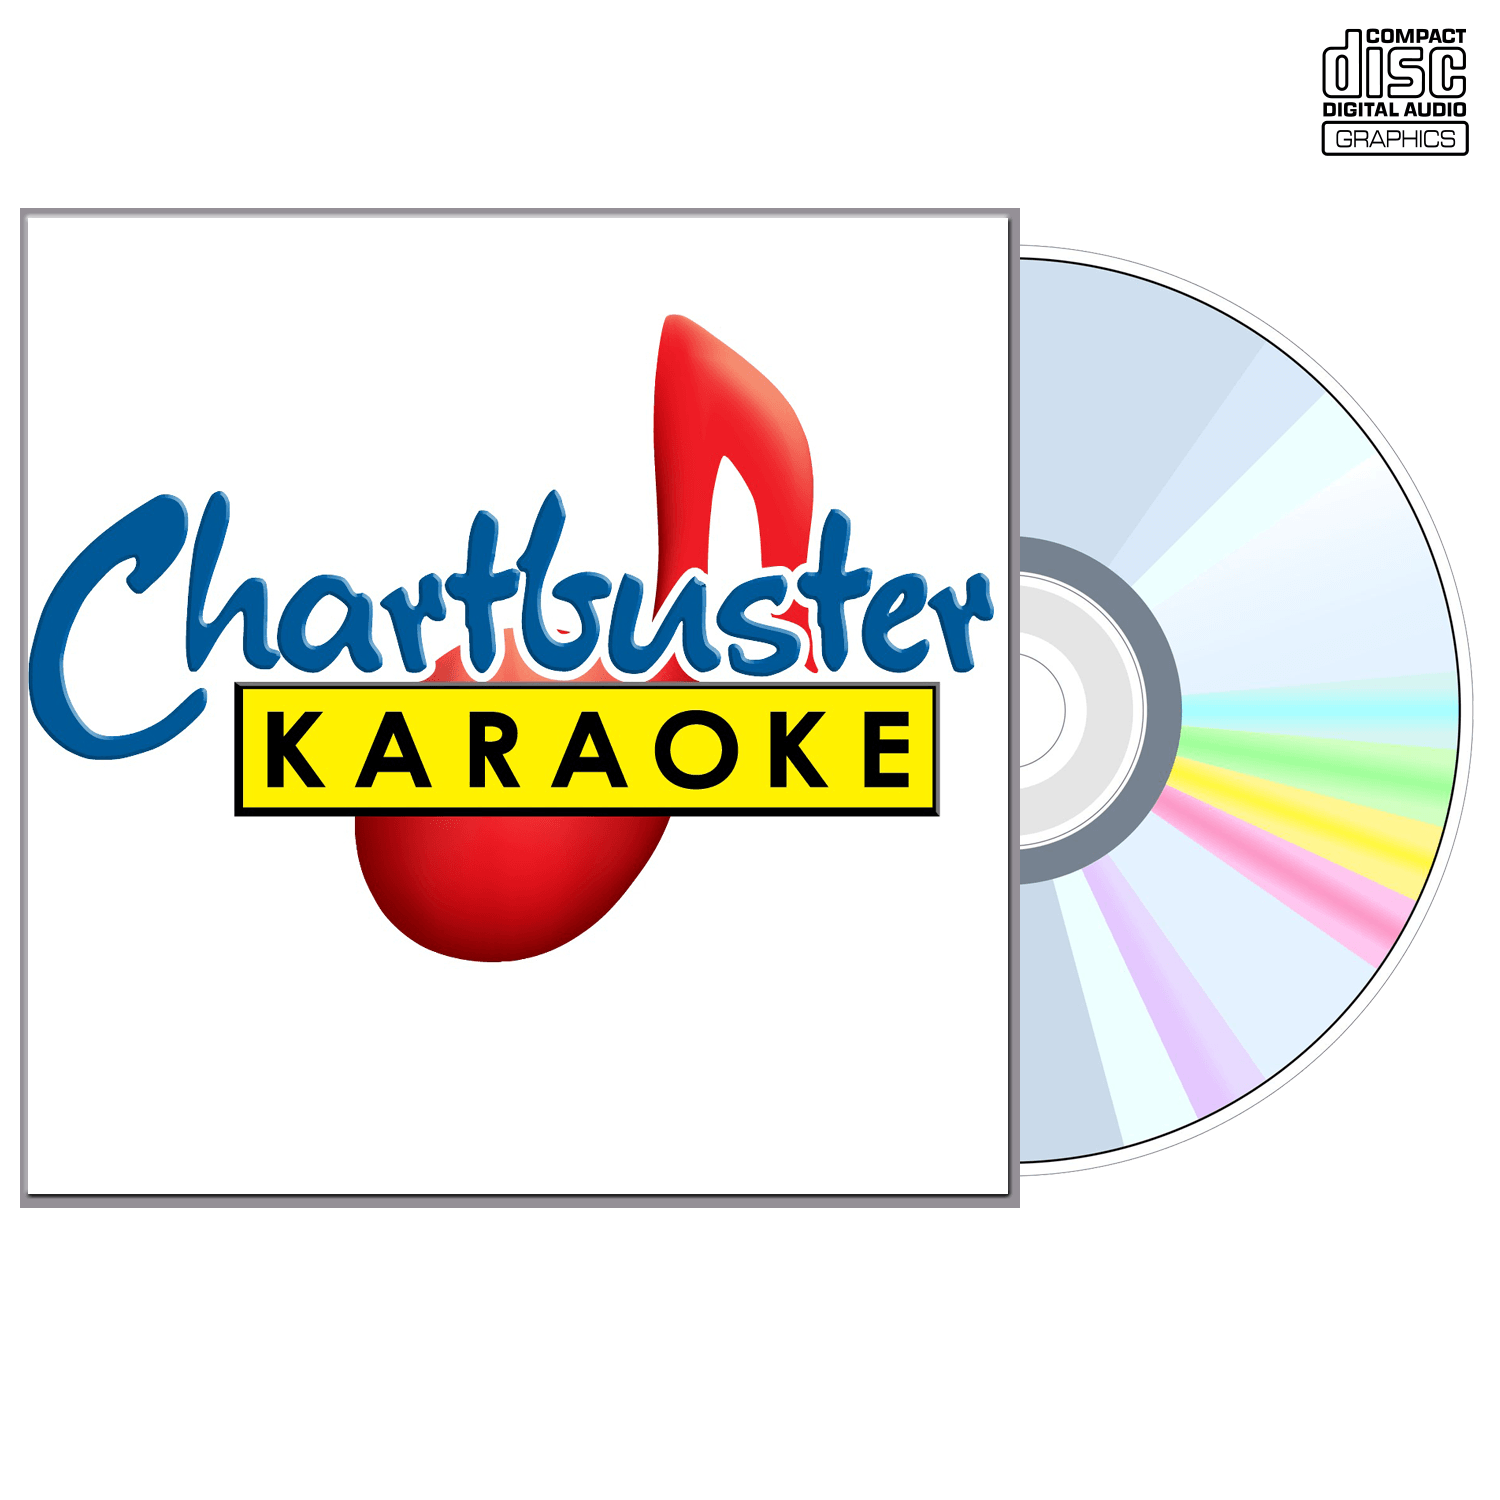 Waylon Jennings Vol 1 - CD+G - Chartbuster Karaoke - Karaoke Home Entertainment